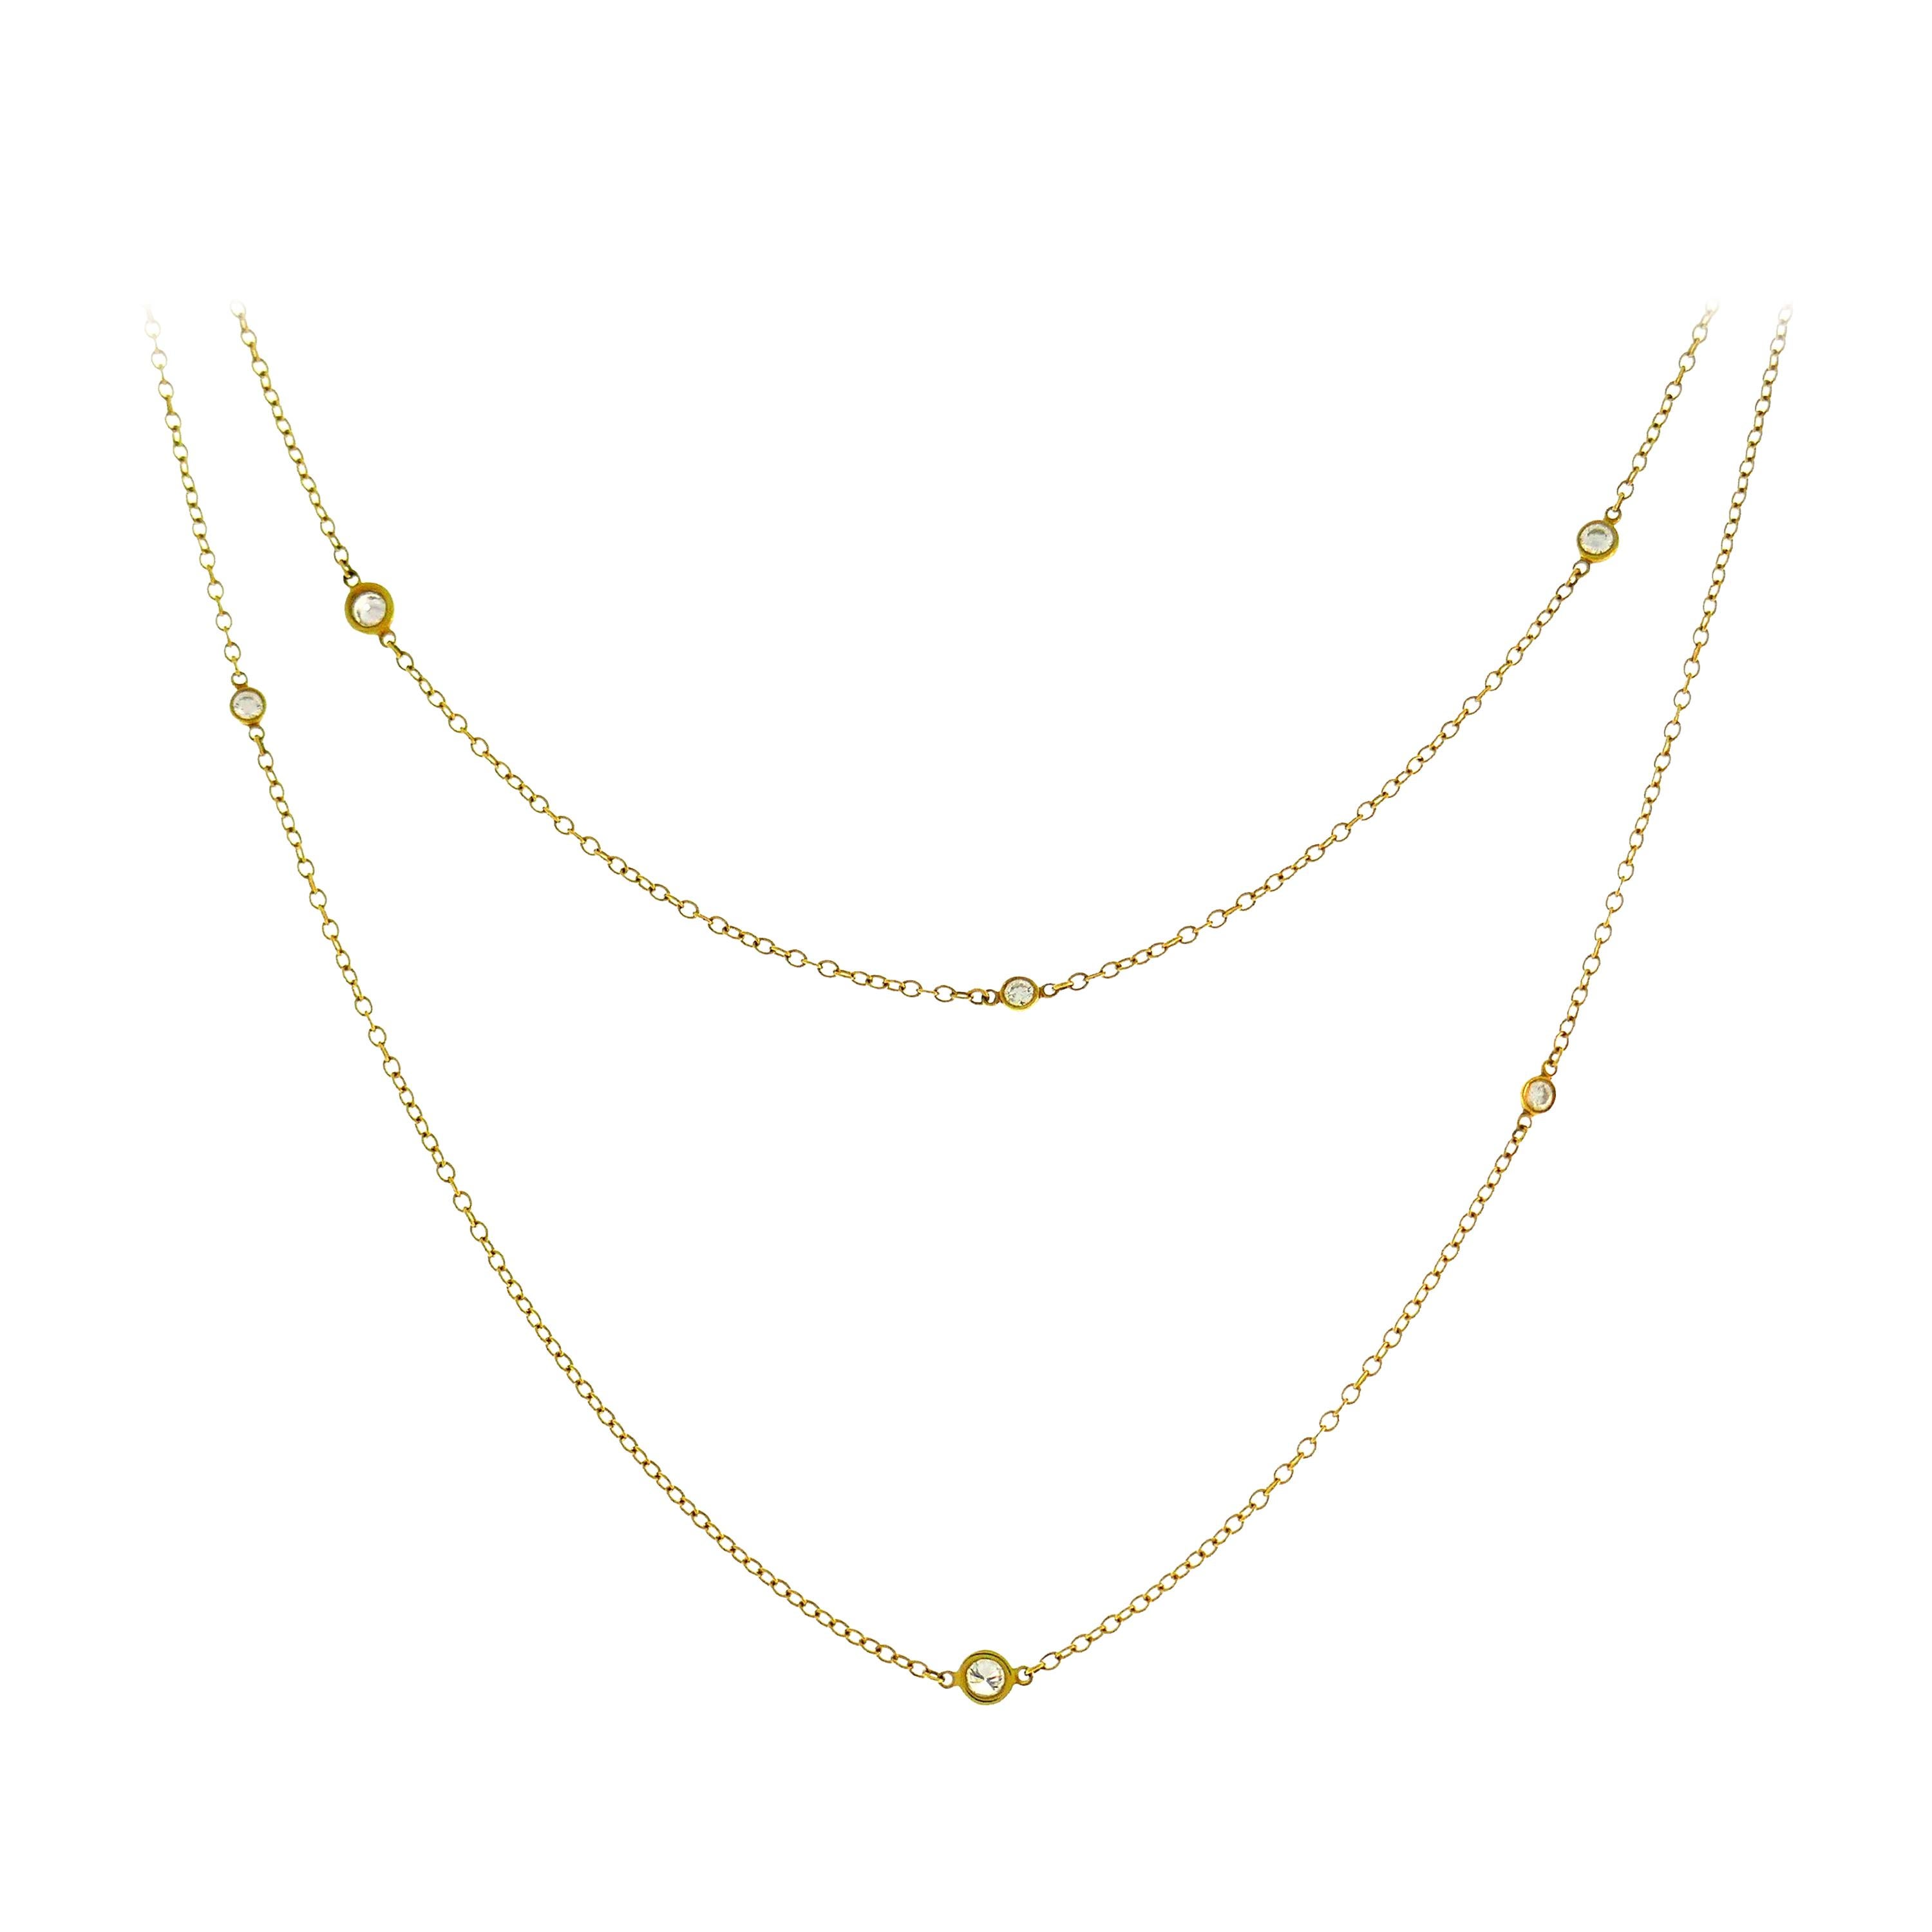 Tiffany & Co. Peretti Diamonds by the Yard Gold Necklace